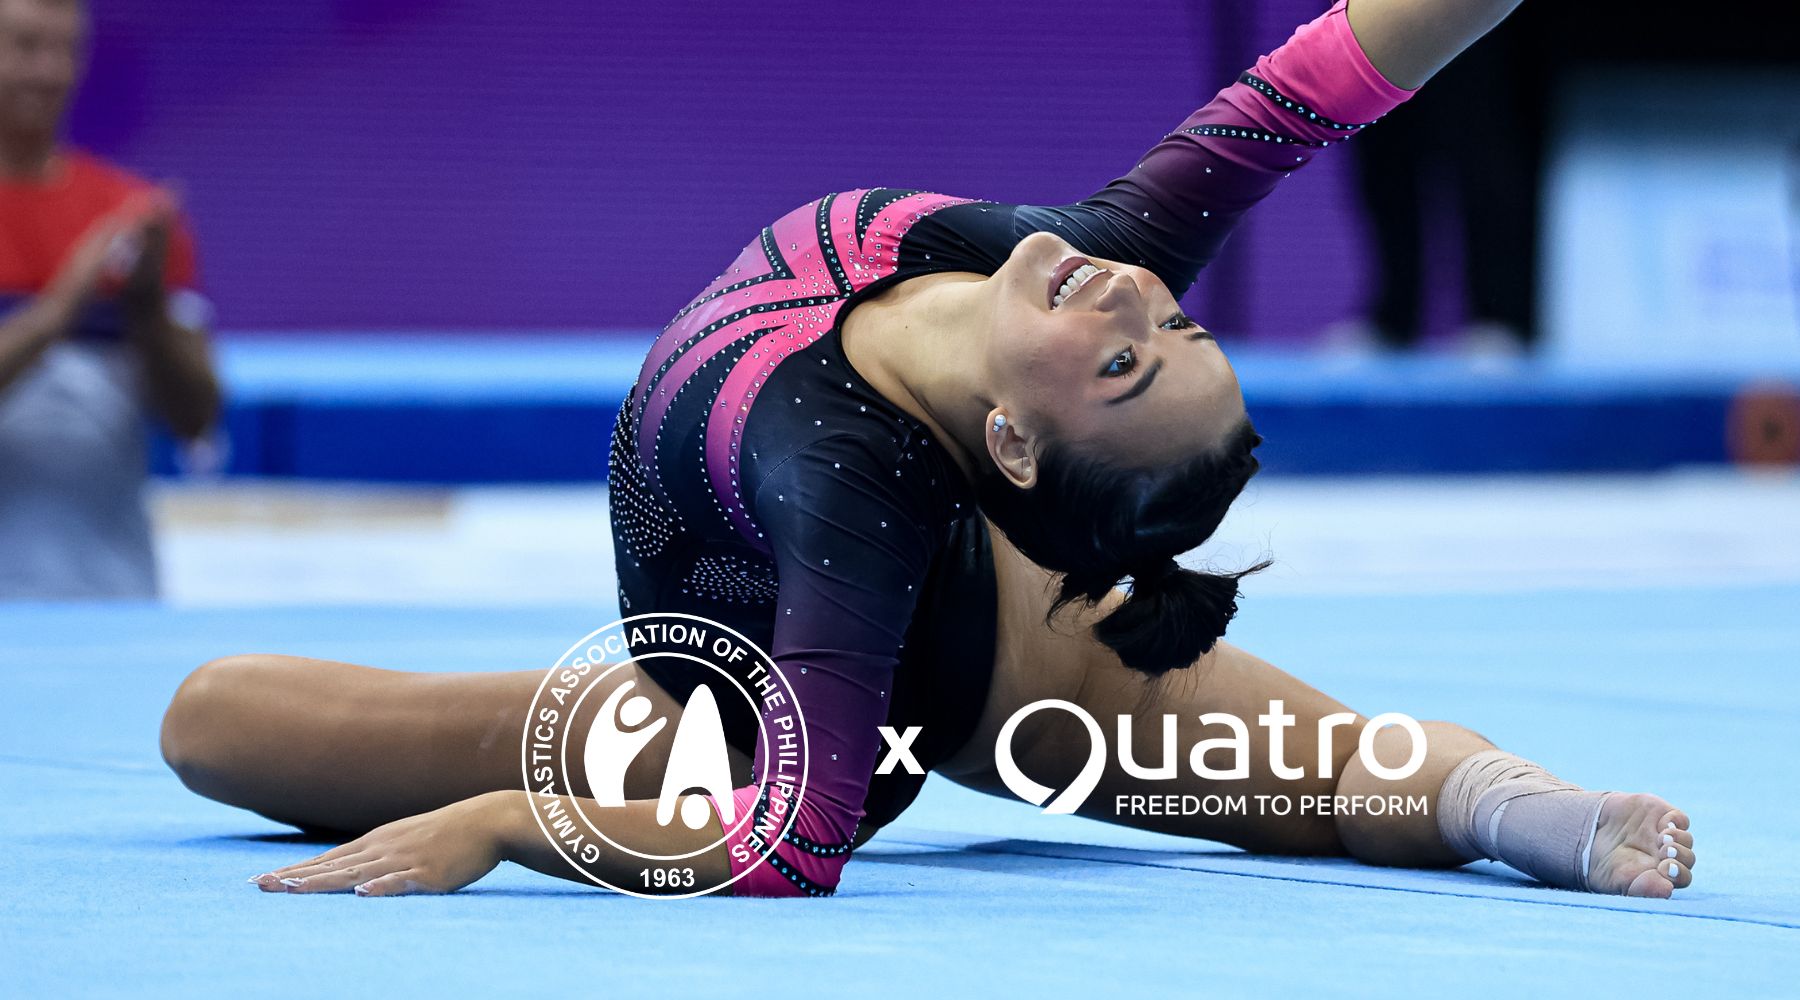 Quatro Gymnastics Launches Partnership With The Gymnastics Association of the Philippines - Quatro Gymnastics UK